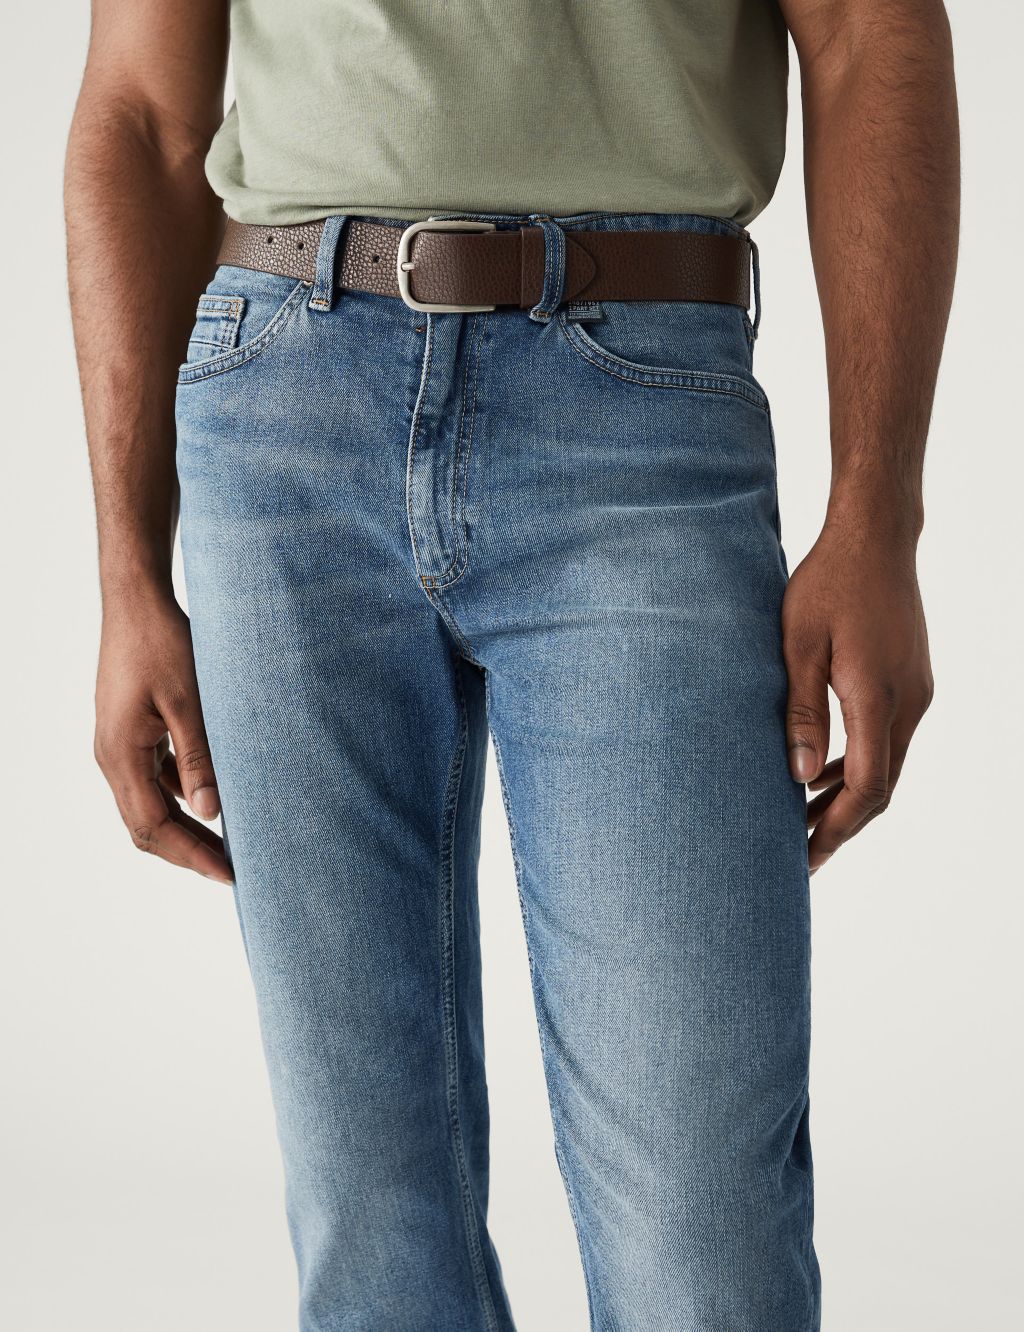 Straight Fit Belted Vintage Wash Jeans image 5